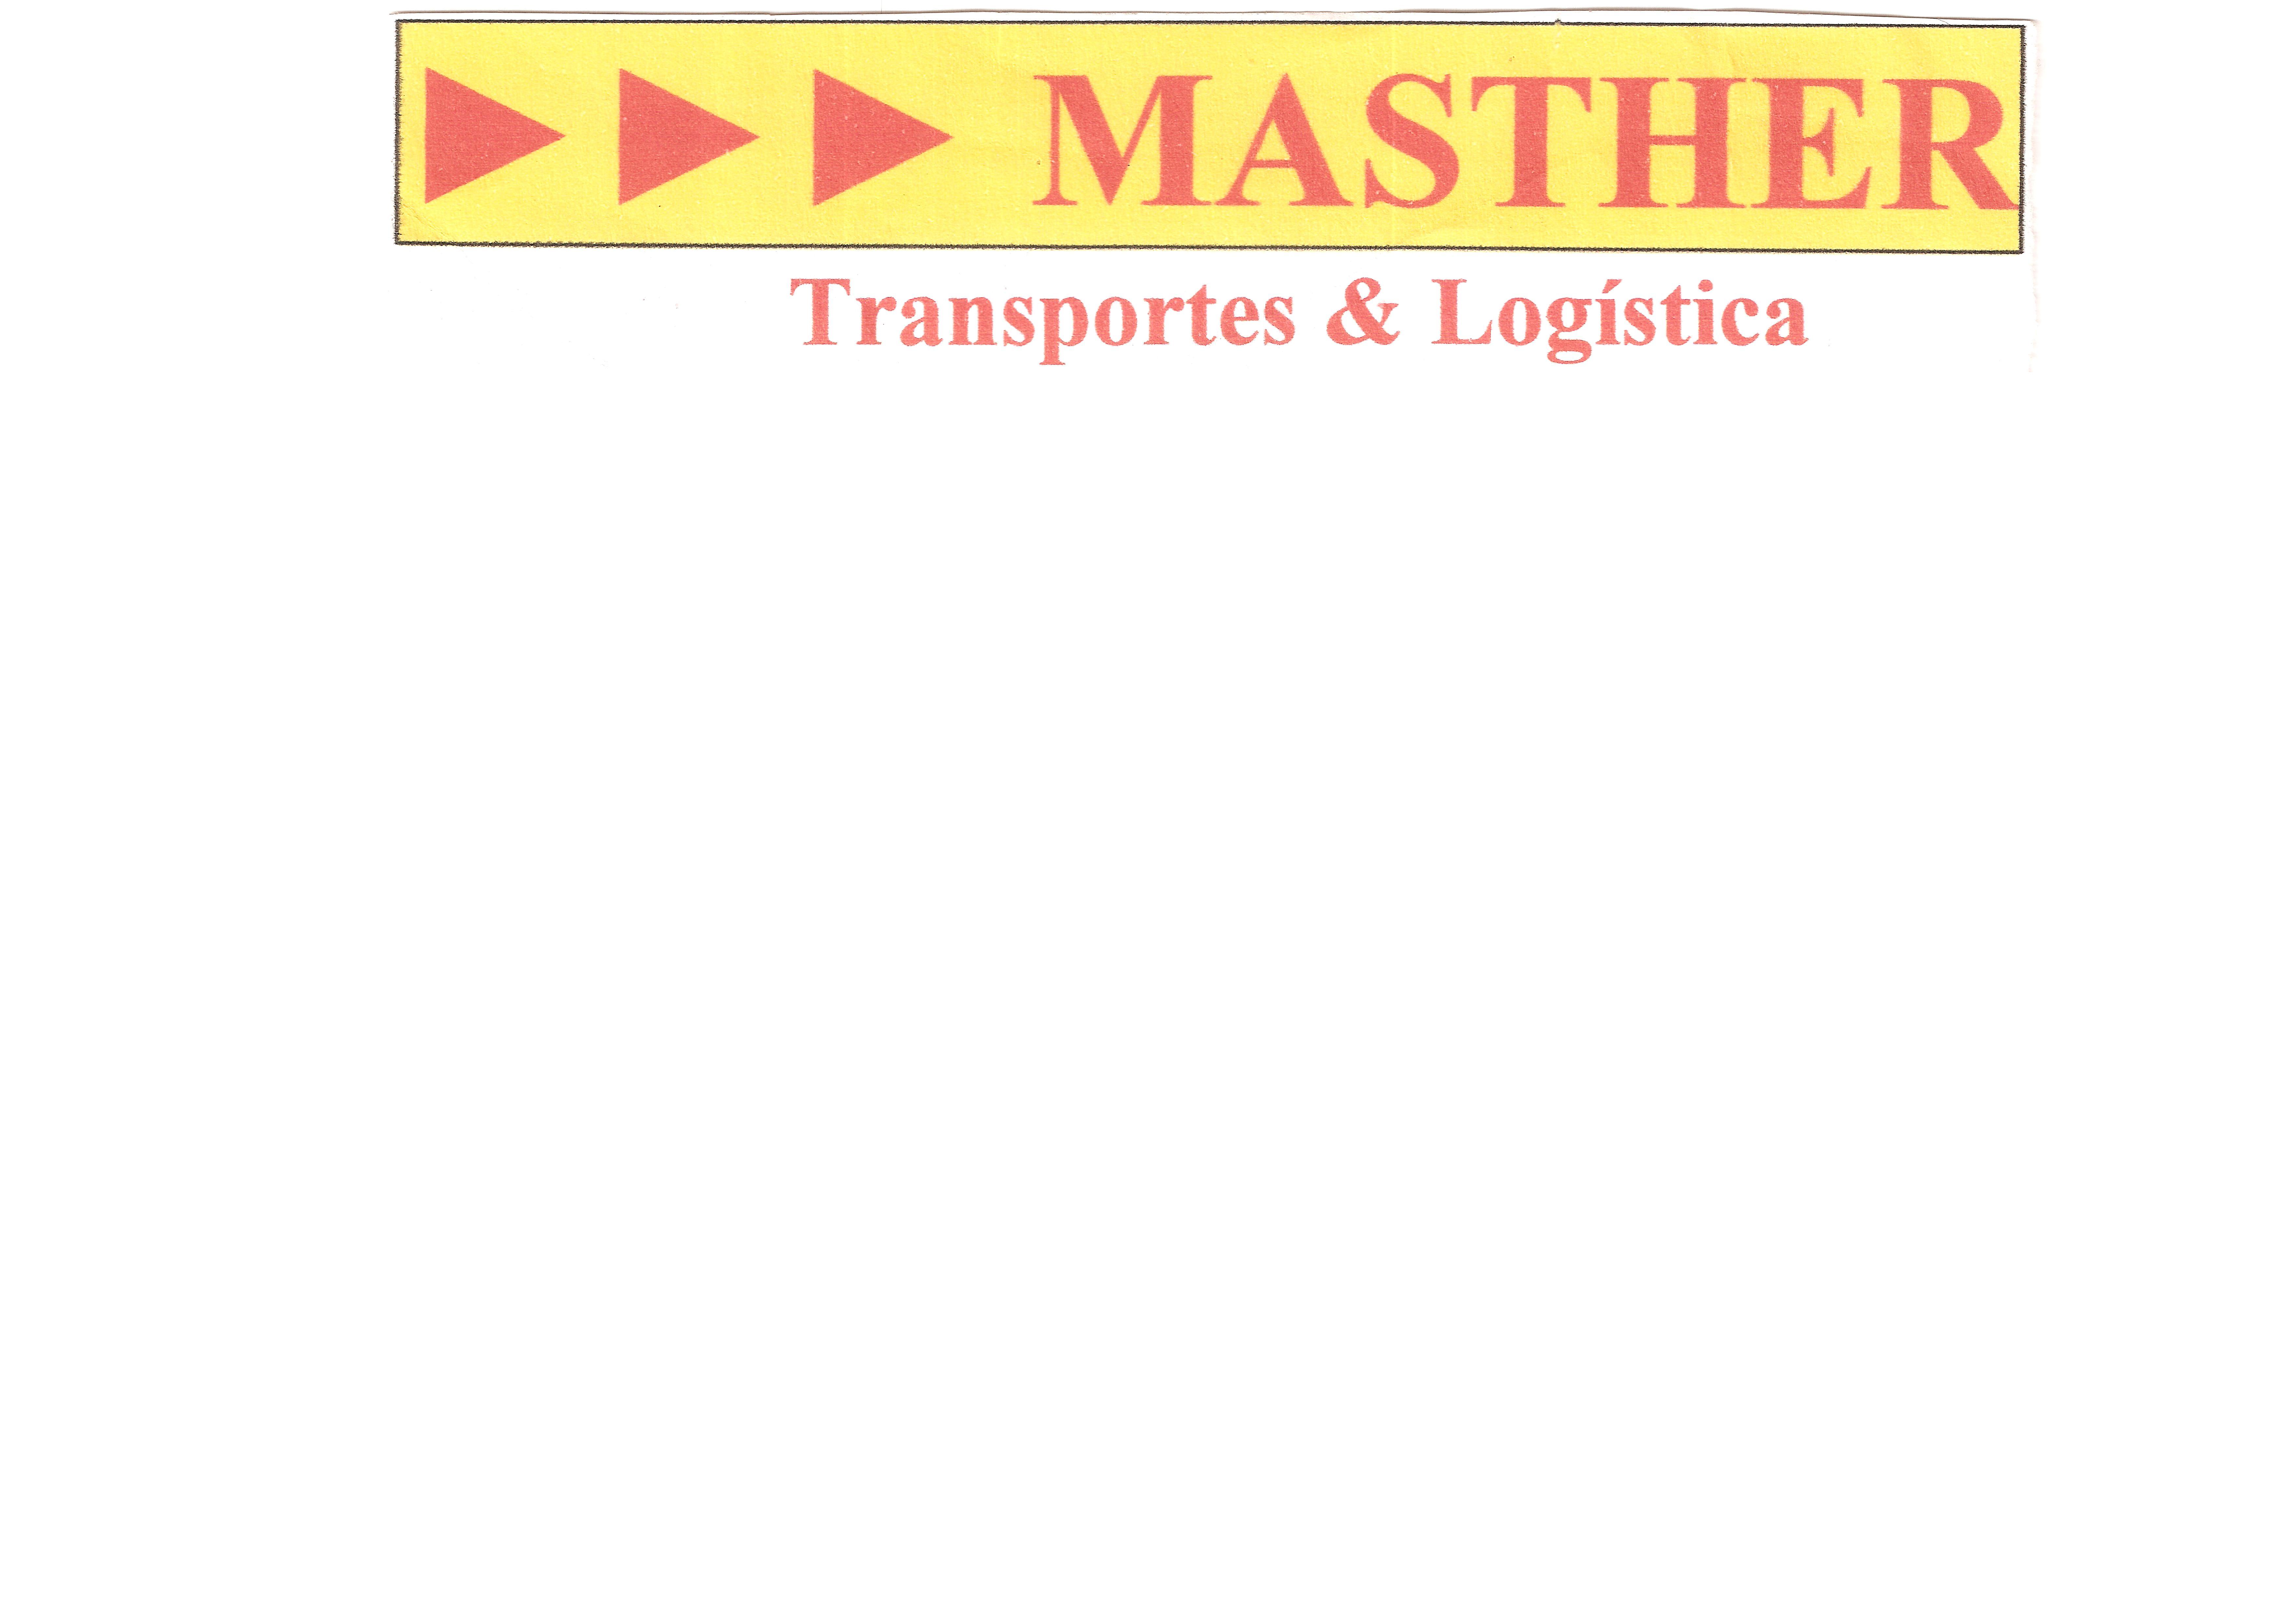 Masther Transportes & Logística